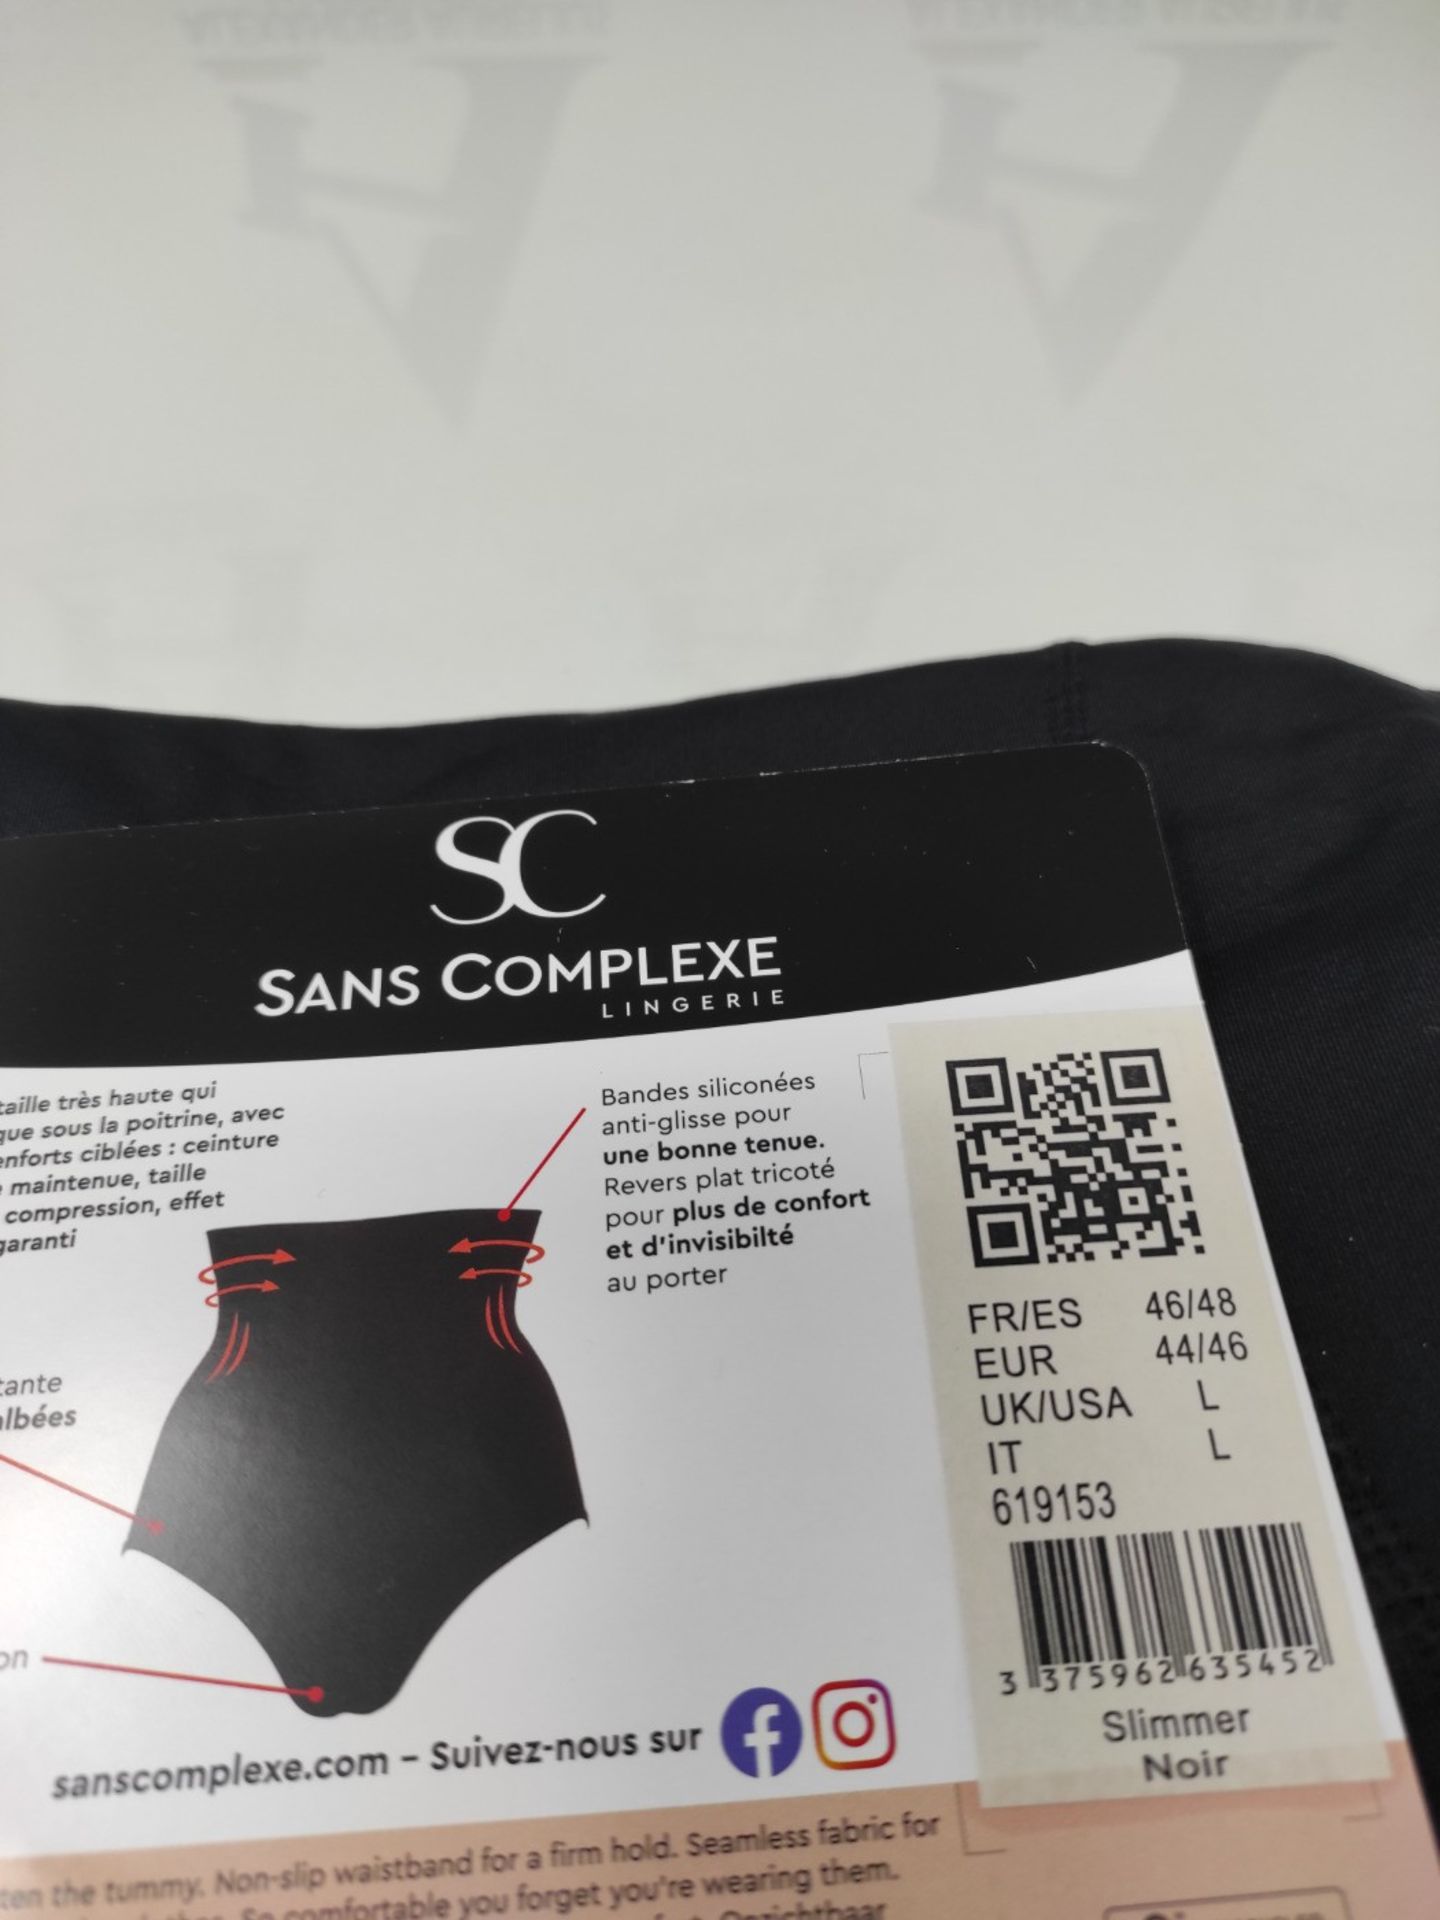 SANS COMPLEXE Women's Shaping Panty Slimmer Uni, Black - Black, Size 44/46 (Manufactur - Image 3 of 3